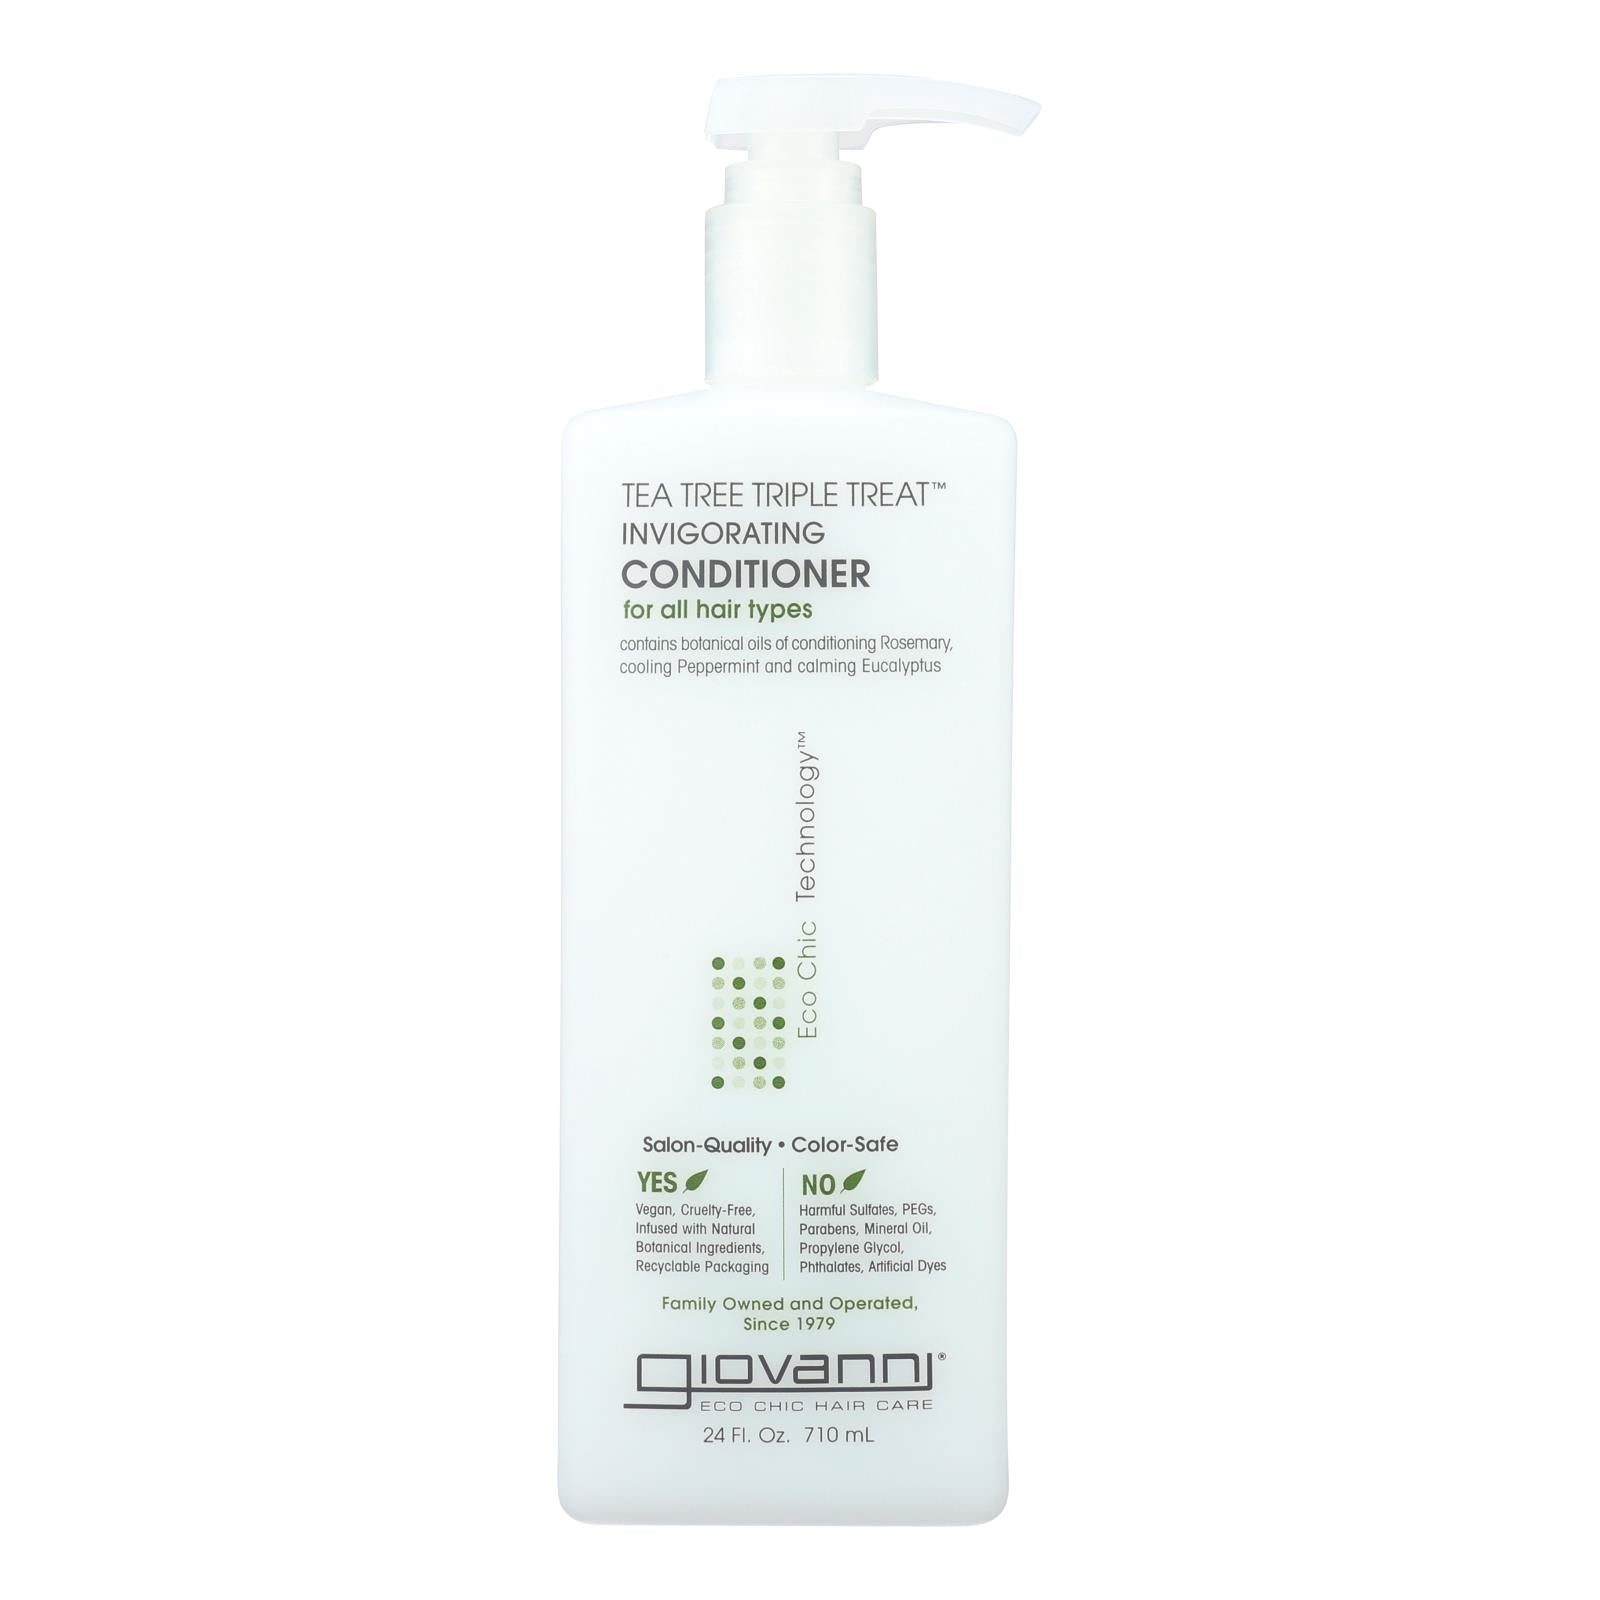 Giovanni Hair Care Products - Conditioner Tea Tree Invigorating - 24 Fz